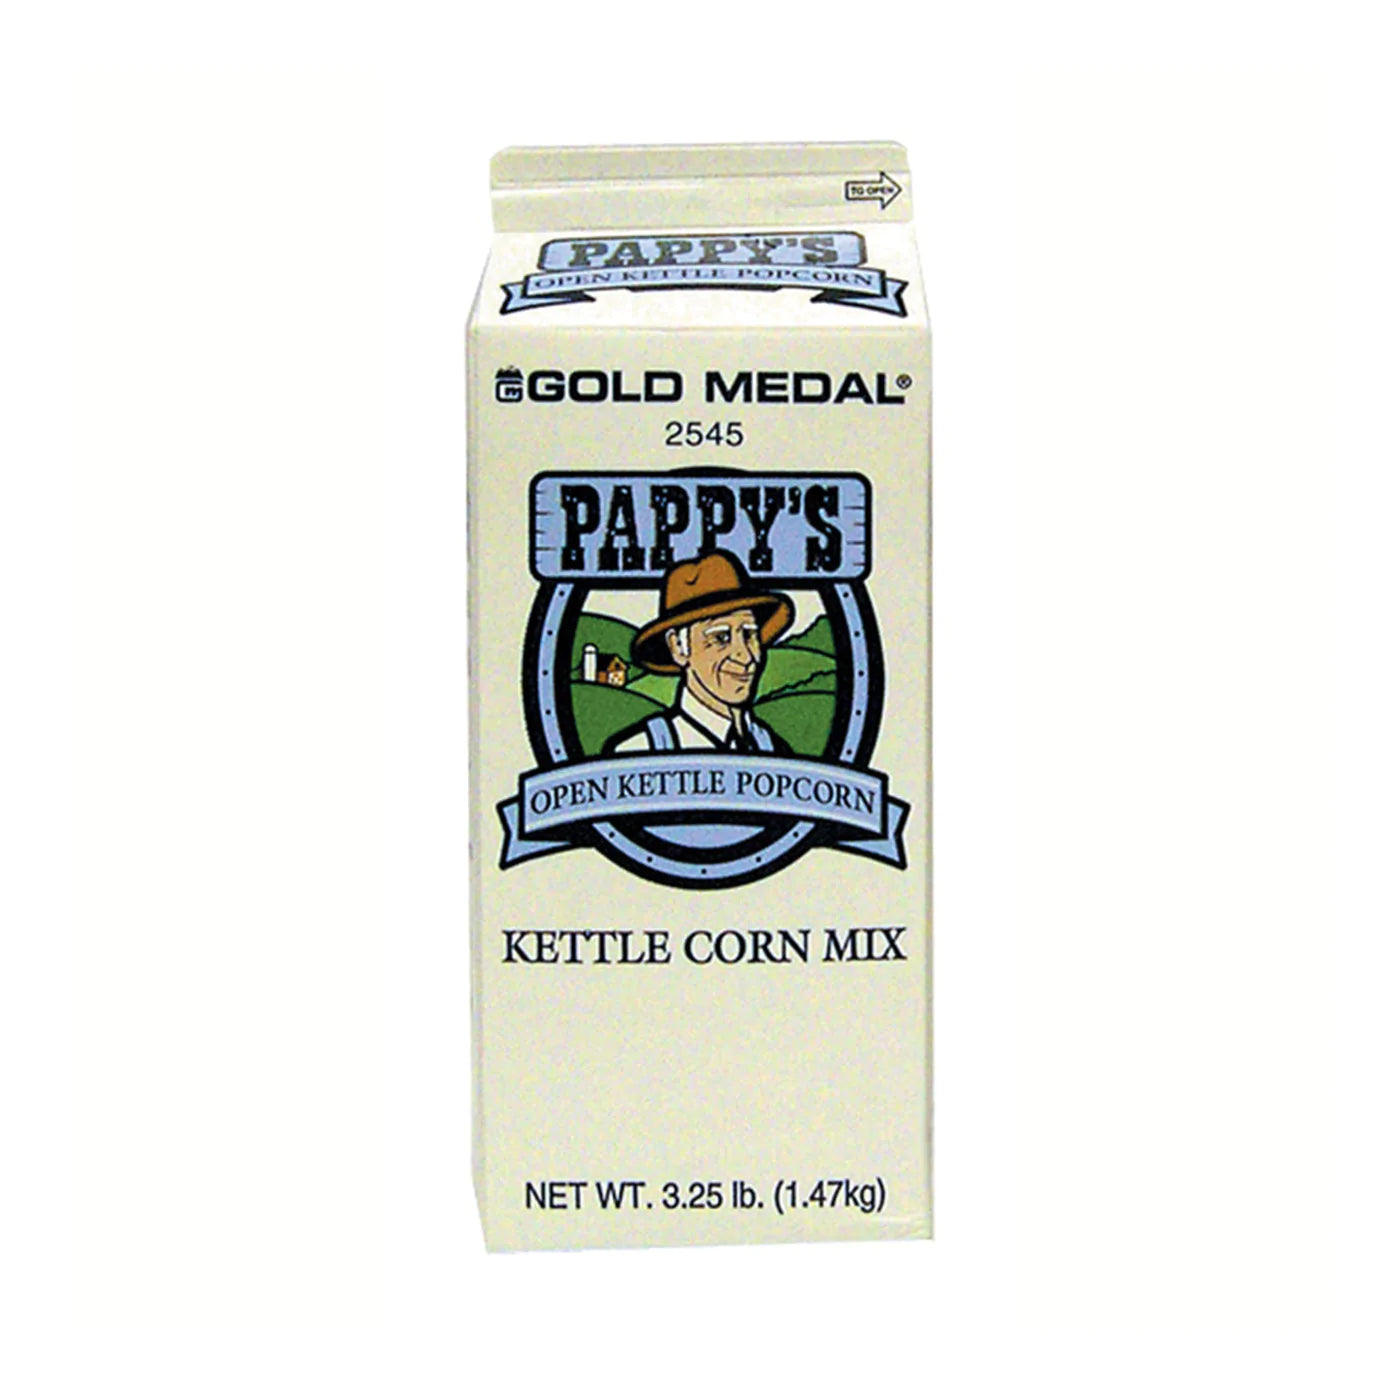 Gold Medal Pappy's Kettle Corn Mix 3.25-lb. carton - Case Count: 6